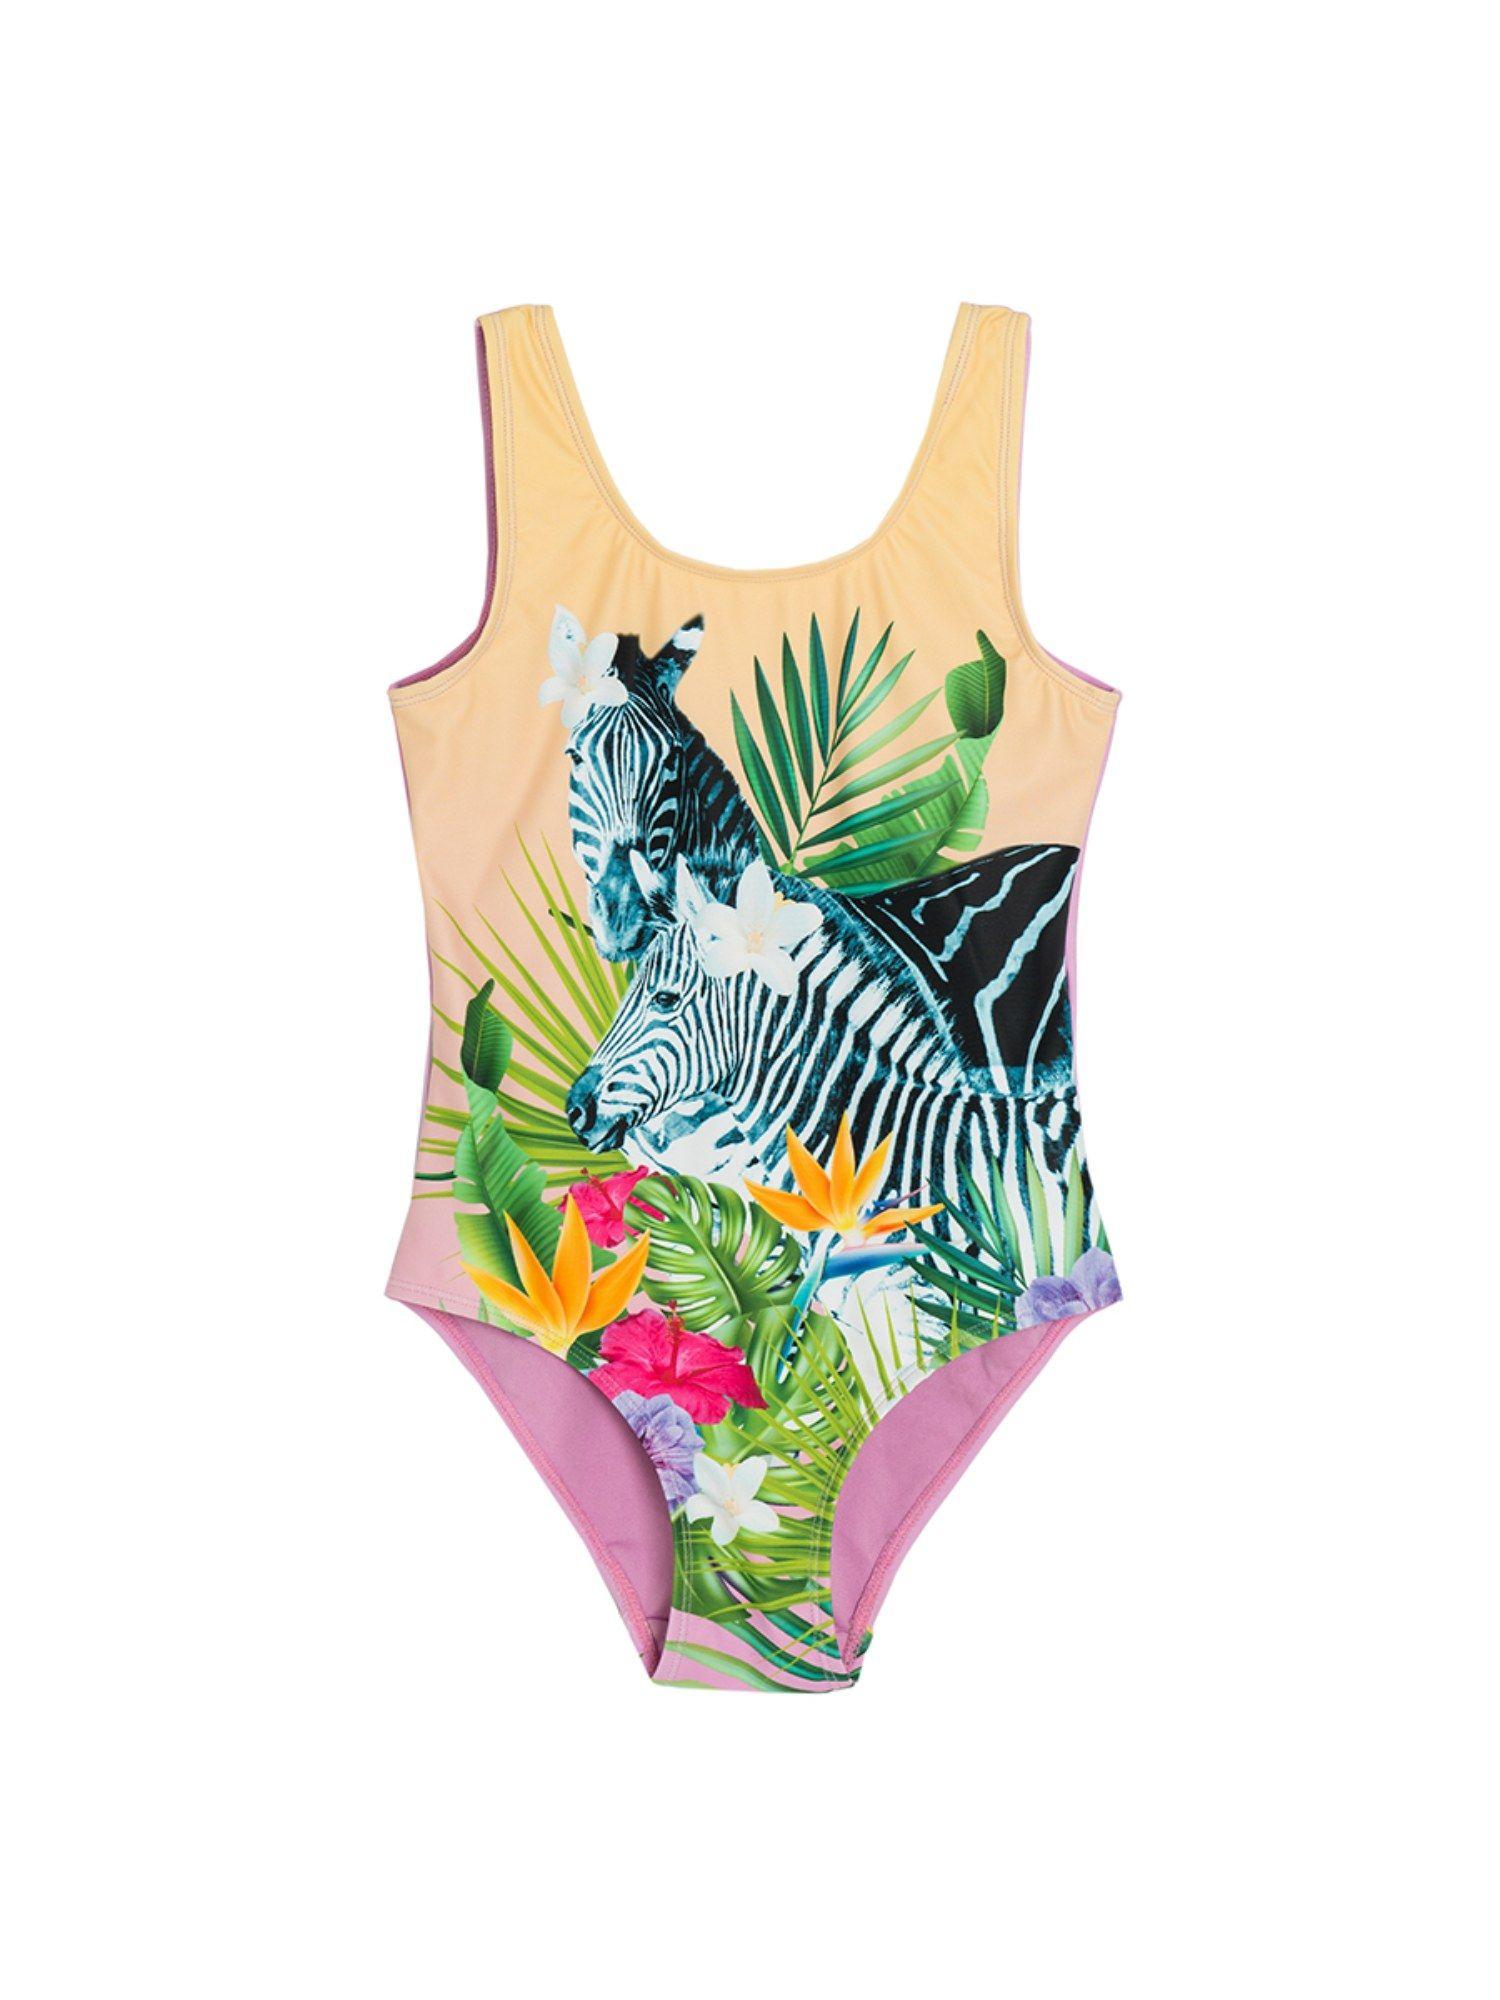 smyk-girls-multi-color-printed-swimwear-suit